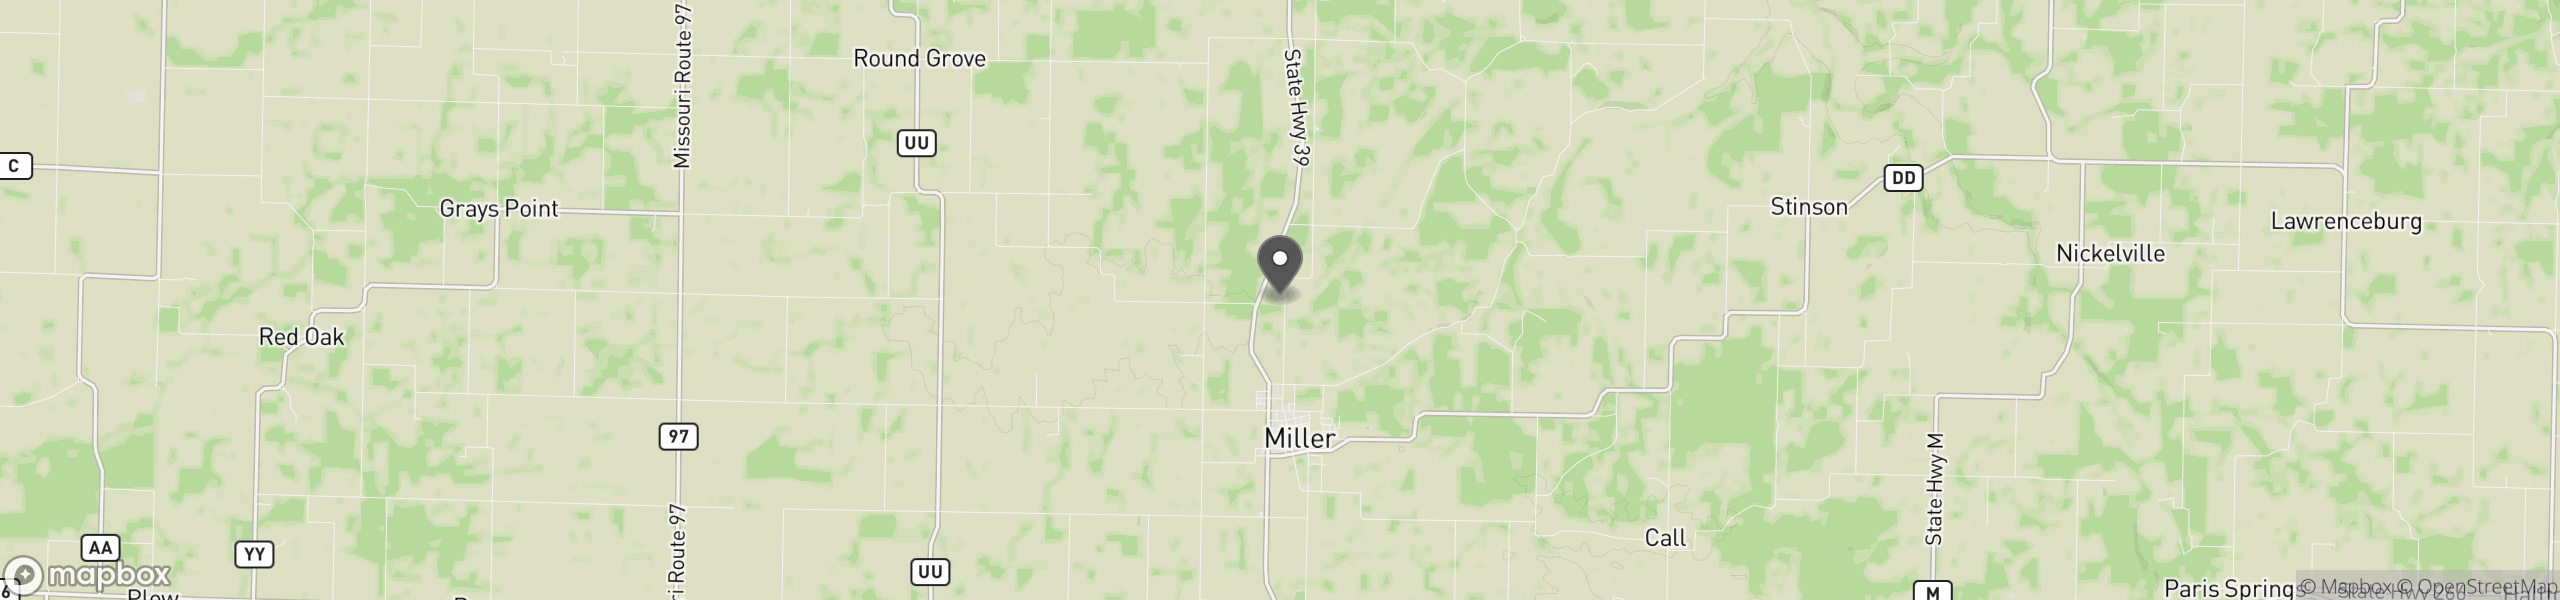 Miller, MO 65707